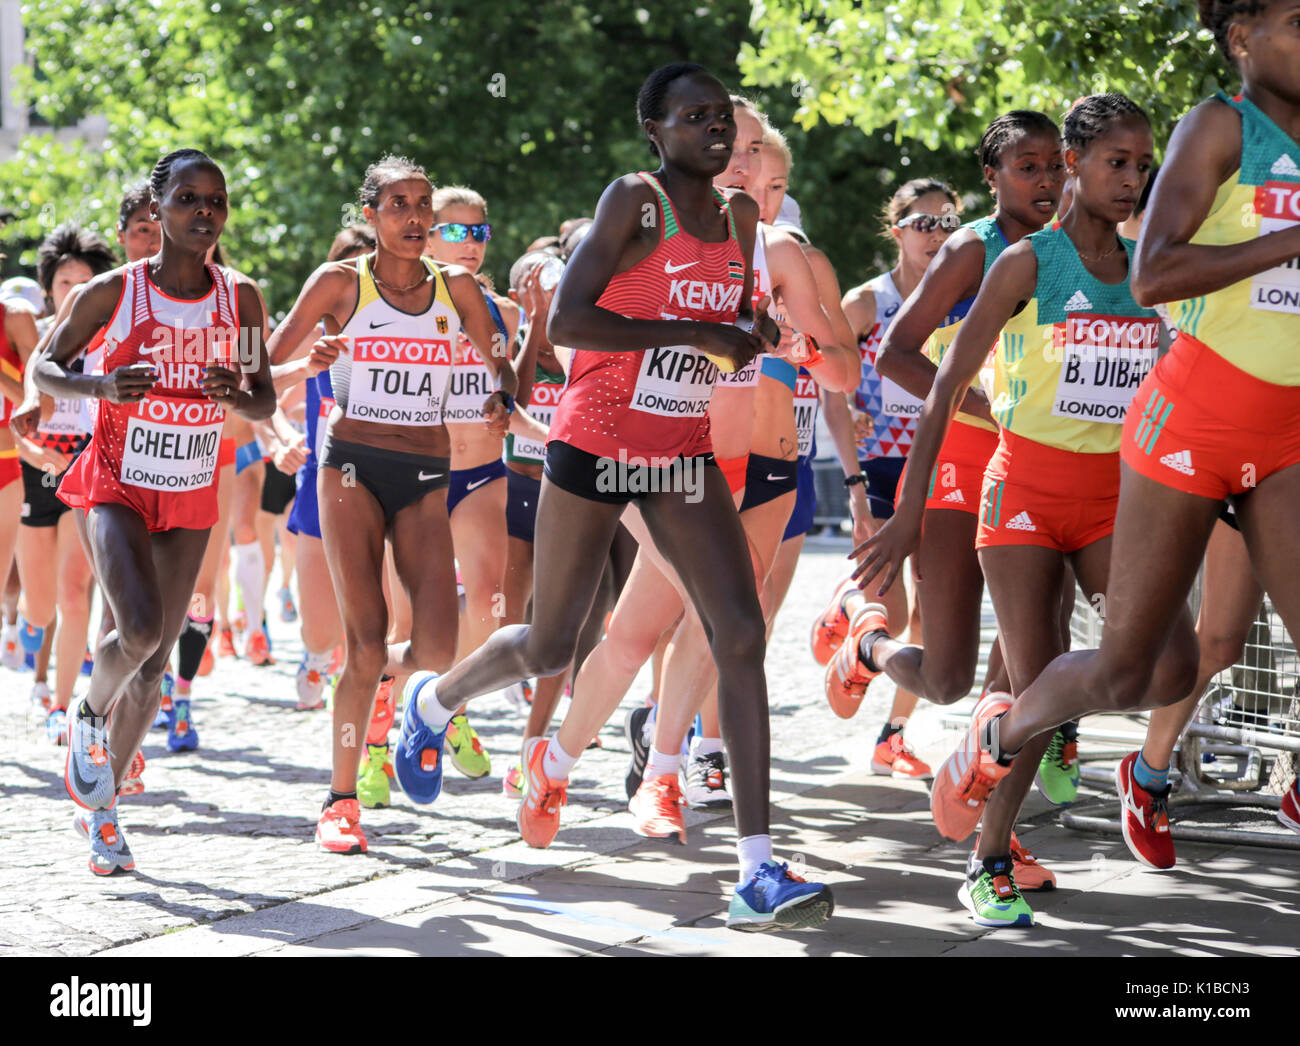 2017/8/6 London: Three Ethiopian athletes including  BERHANE DIBABA leads a group of athletes in the IAAF World Championship Marathon Stock Photo